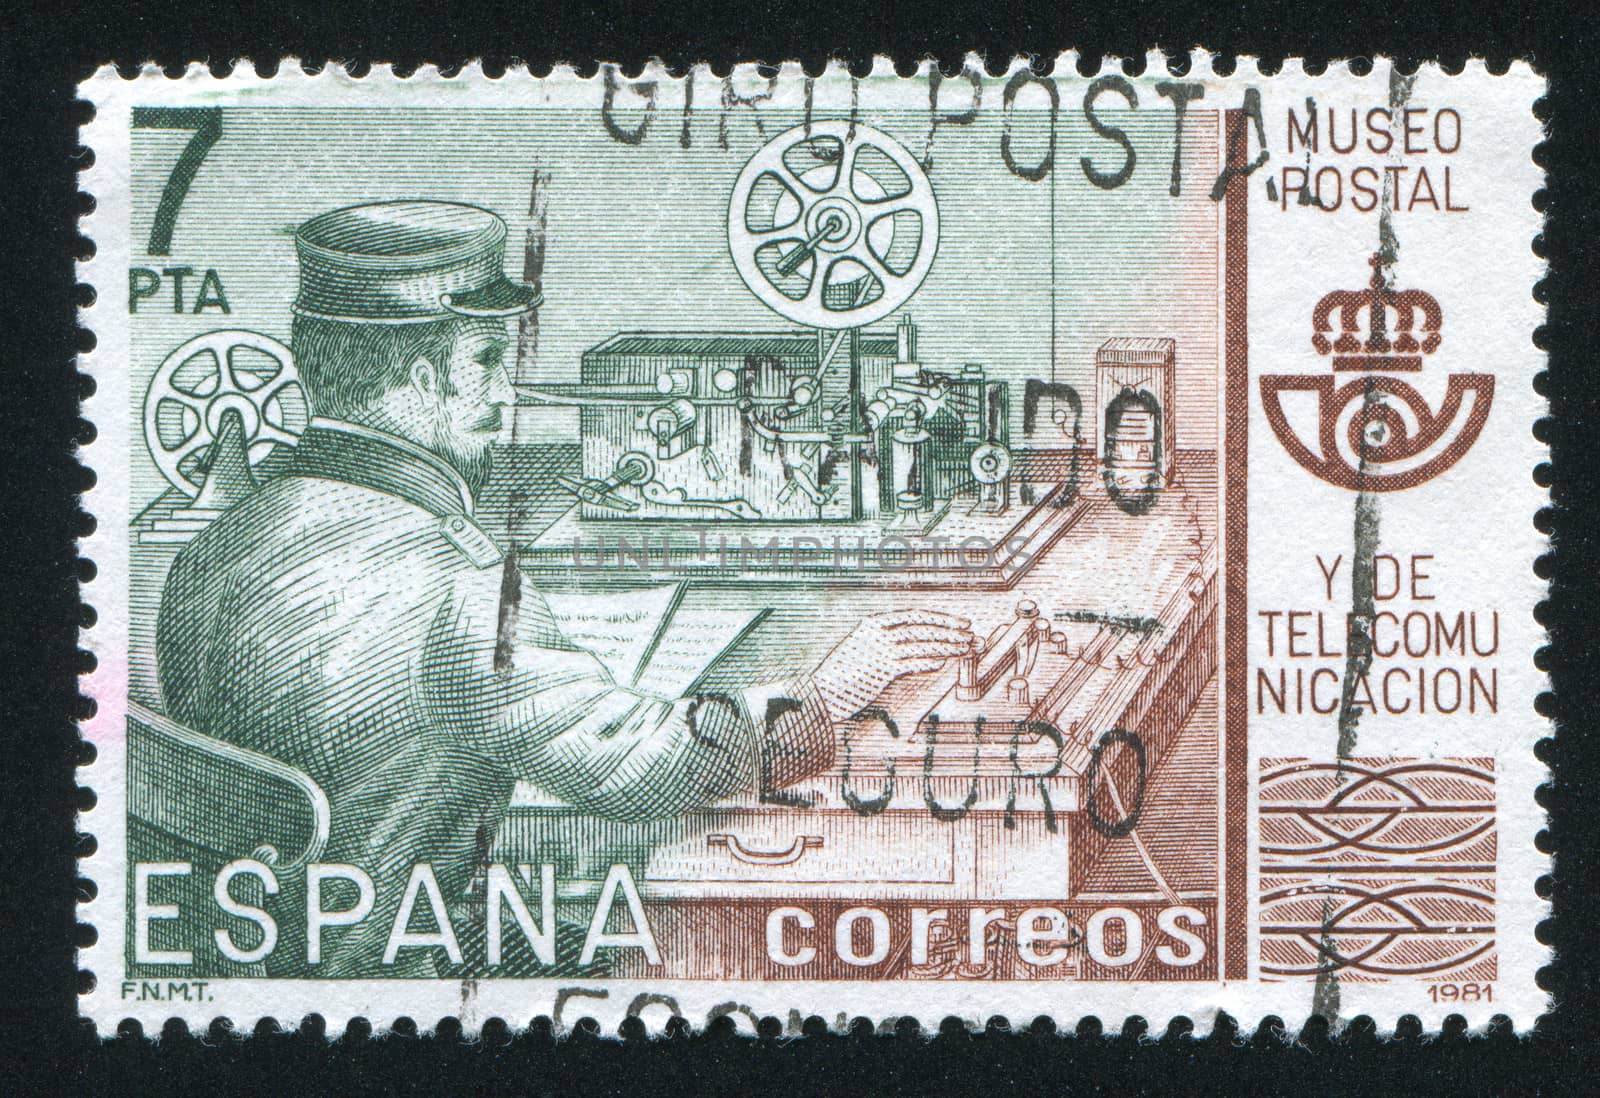 SPAIN - CIRCA 1981: stamp printed by Spain, shows Telegrapher, Postal
Museum, Madrid, circa 1981